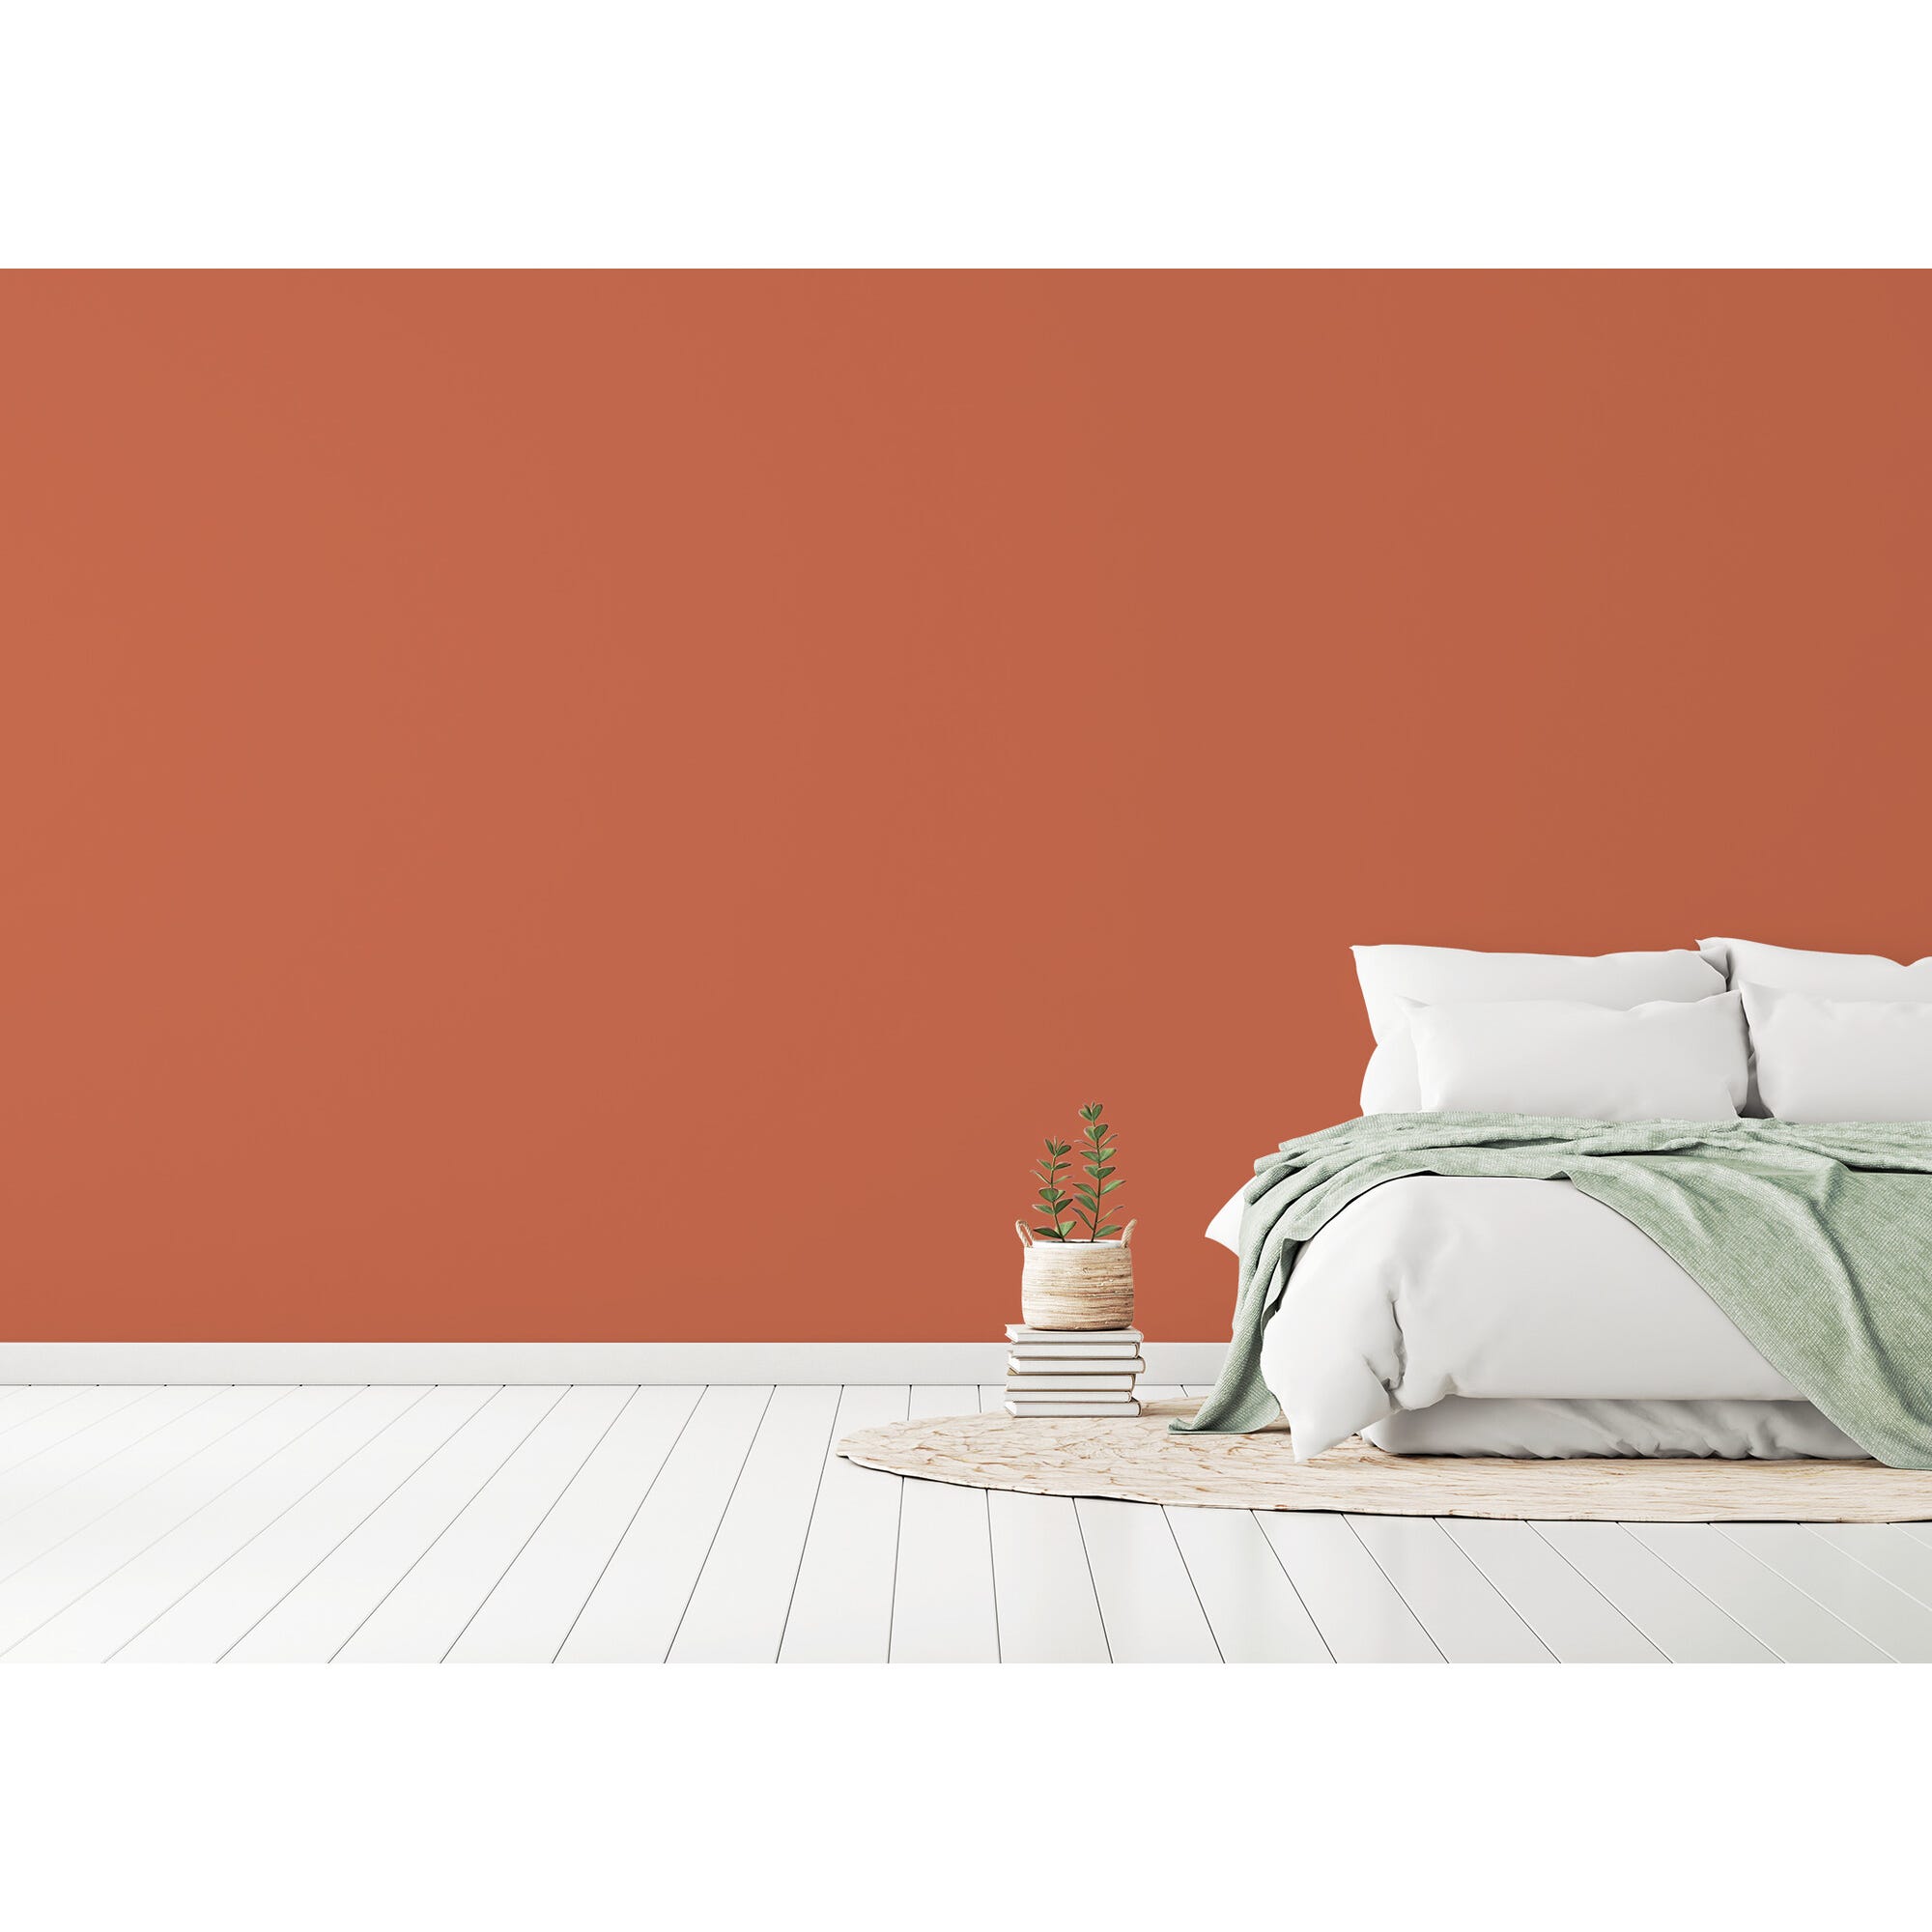 Peinture intérieure satin orange vernia teintée en machine 4L HPO - MOSAIK 4